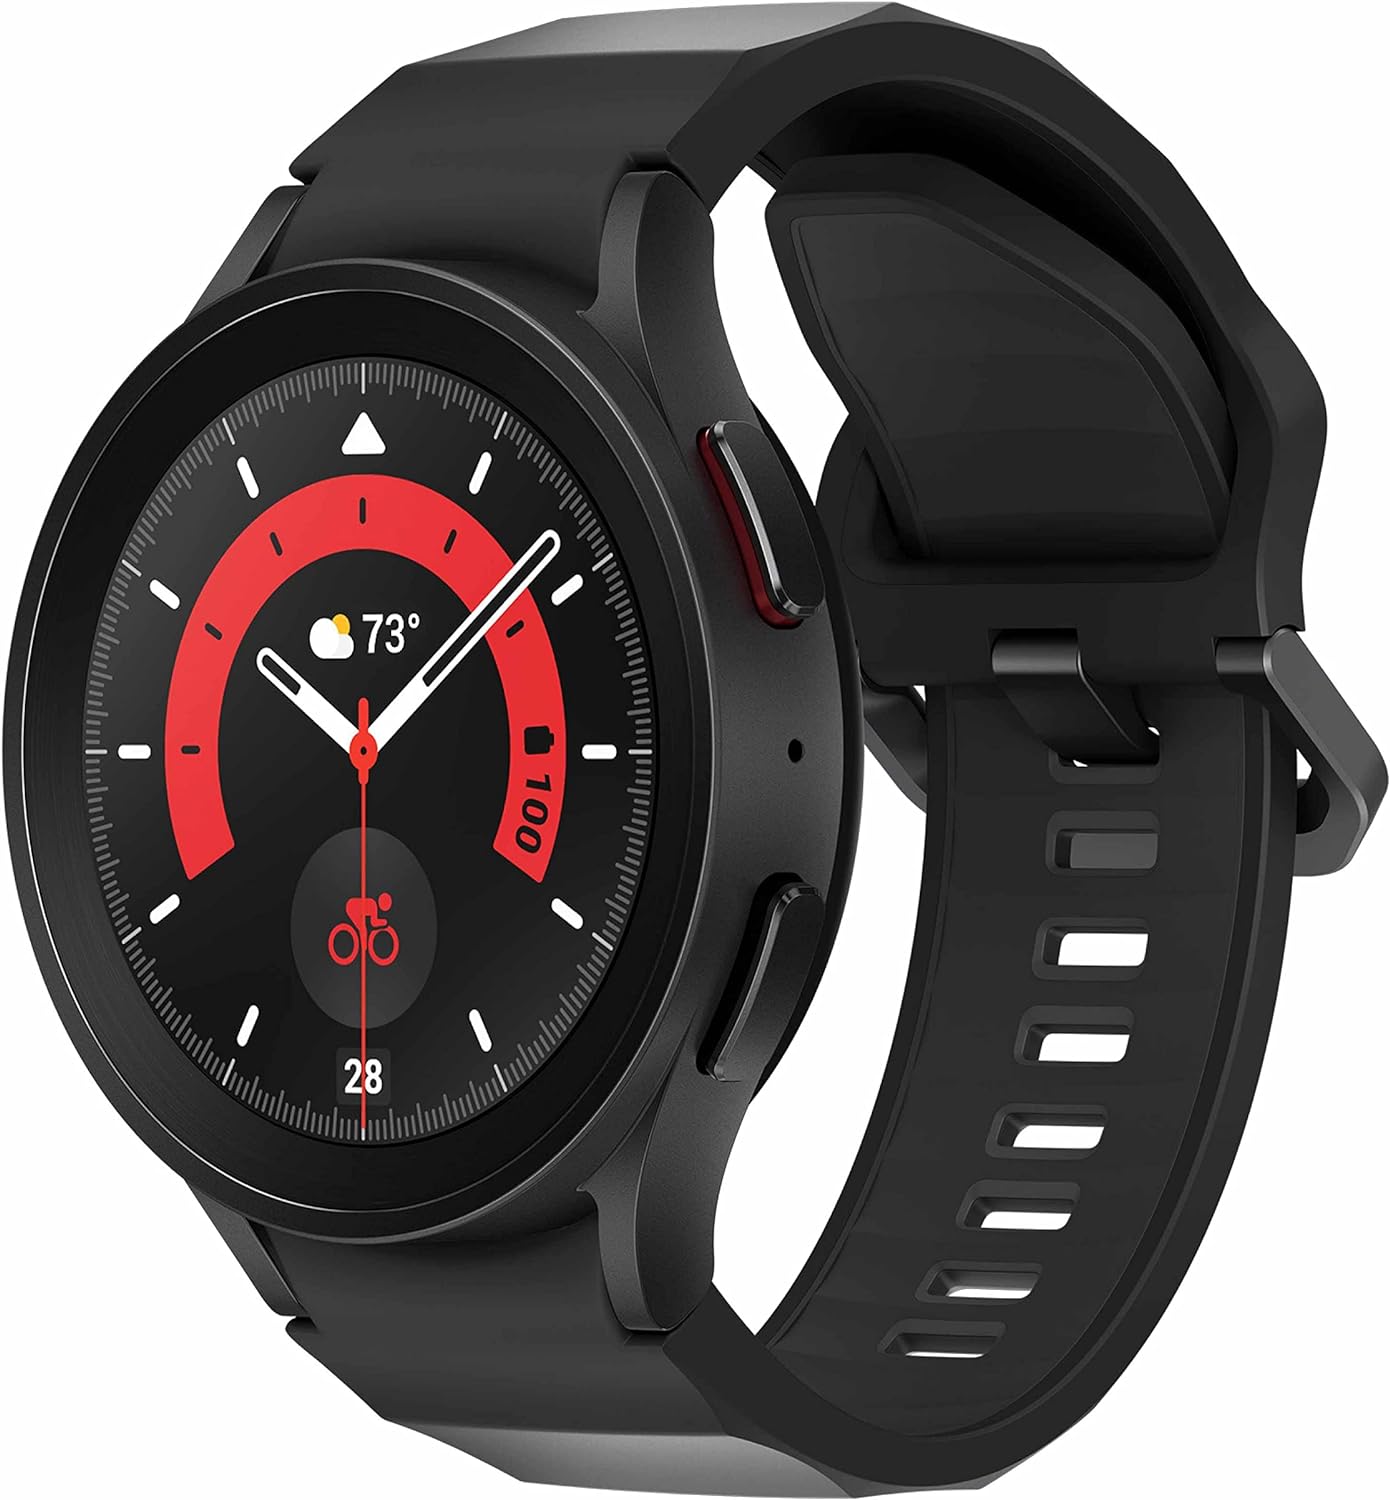 Save $100 on the Galaxy Watch 5 Pro Bespoke Edition!